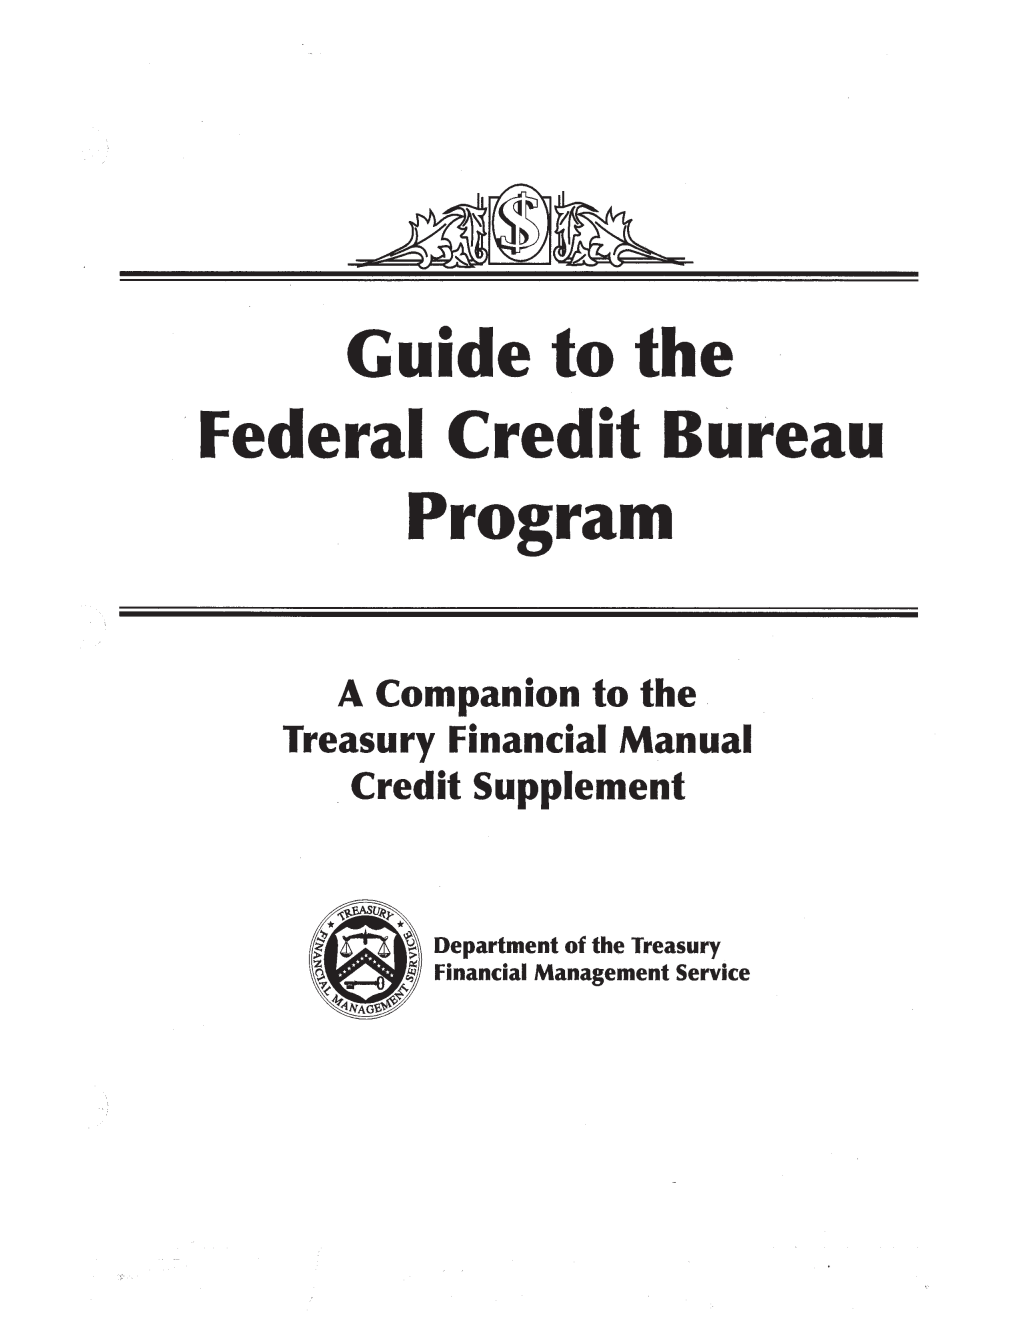 Federal Credit Bureau Program Guide